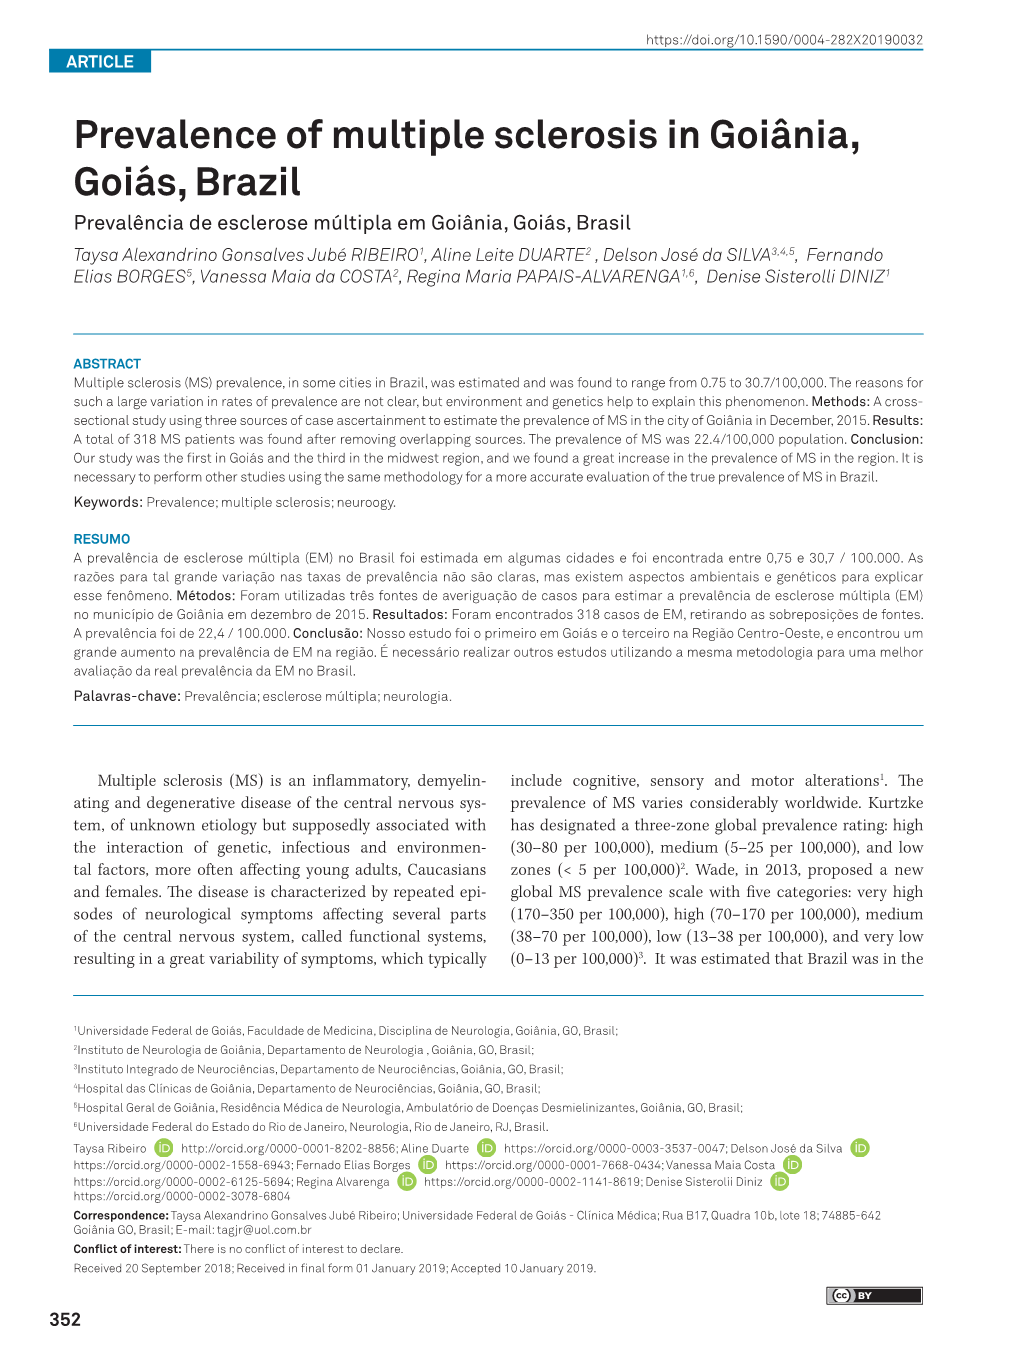 Prevalence of Multiple Sclerosis in Goiânia, Goiás, Brazil